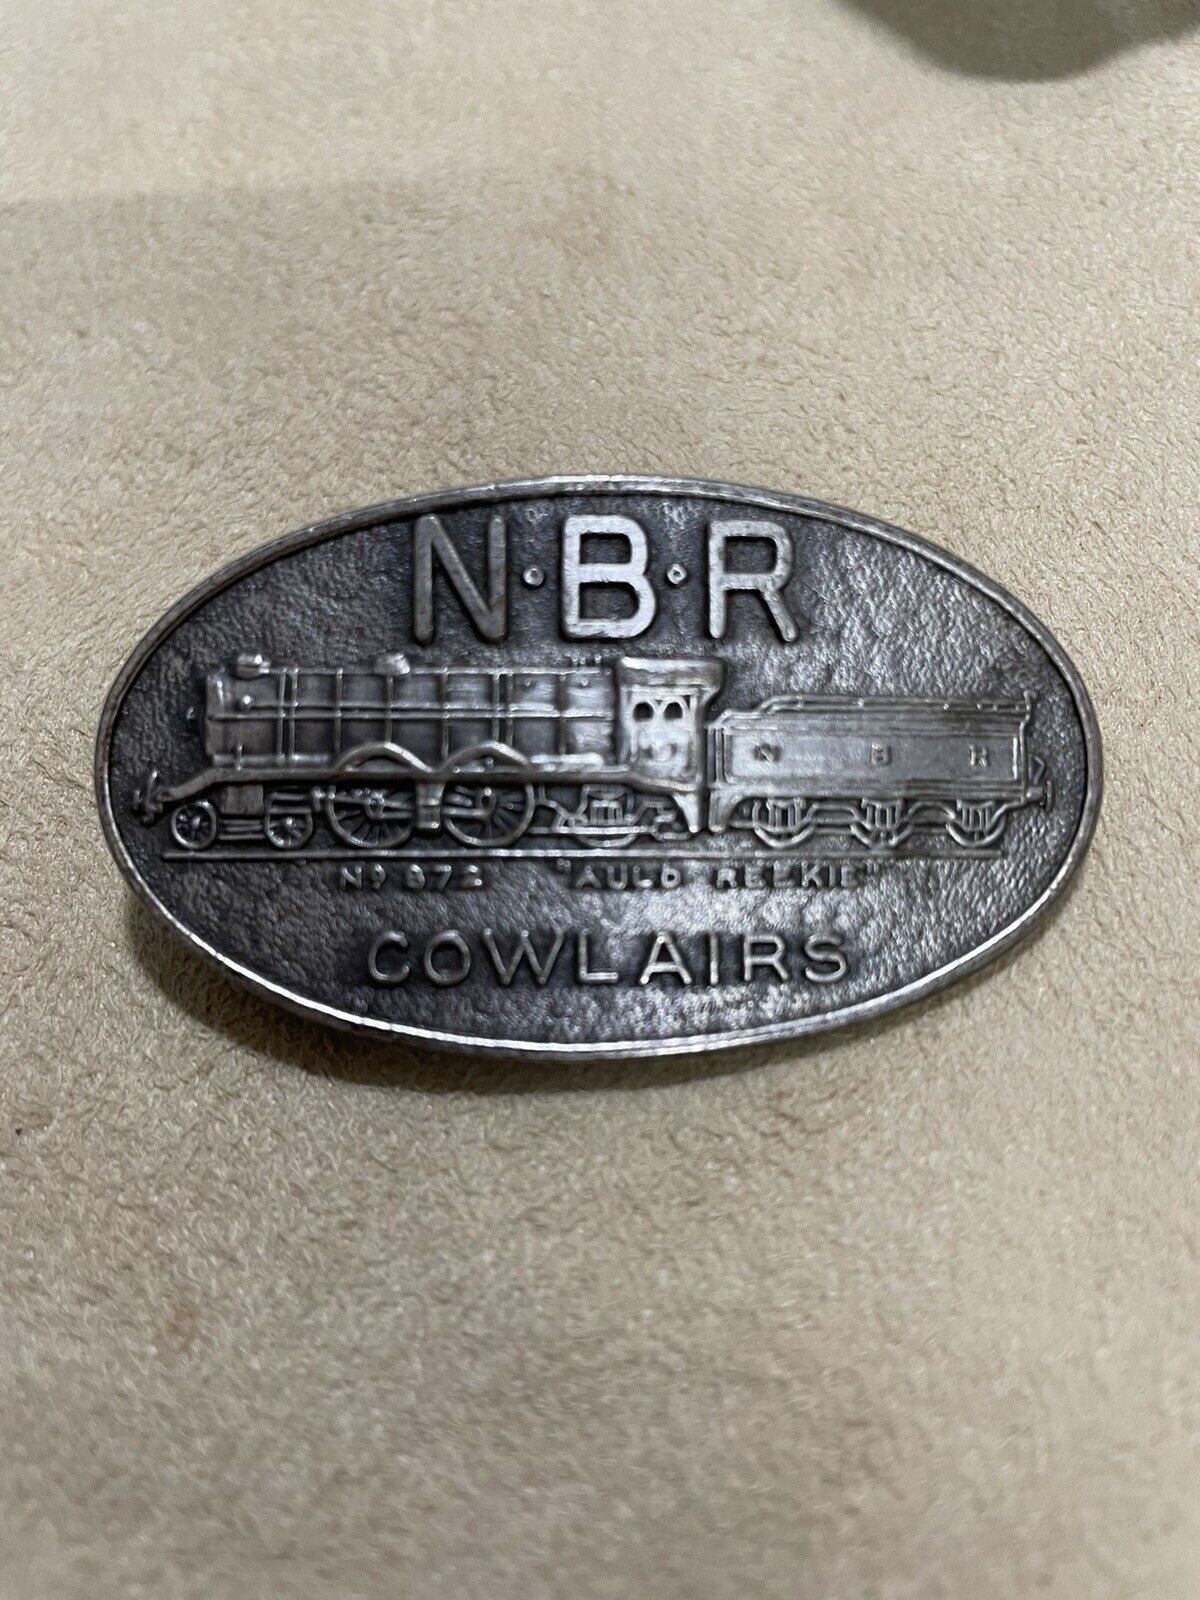 NBR North British Railway Cowlairs Train Nº 873 Auld Reekie BR Locomotive Pin